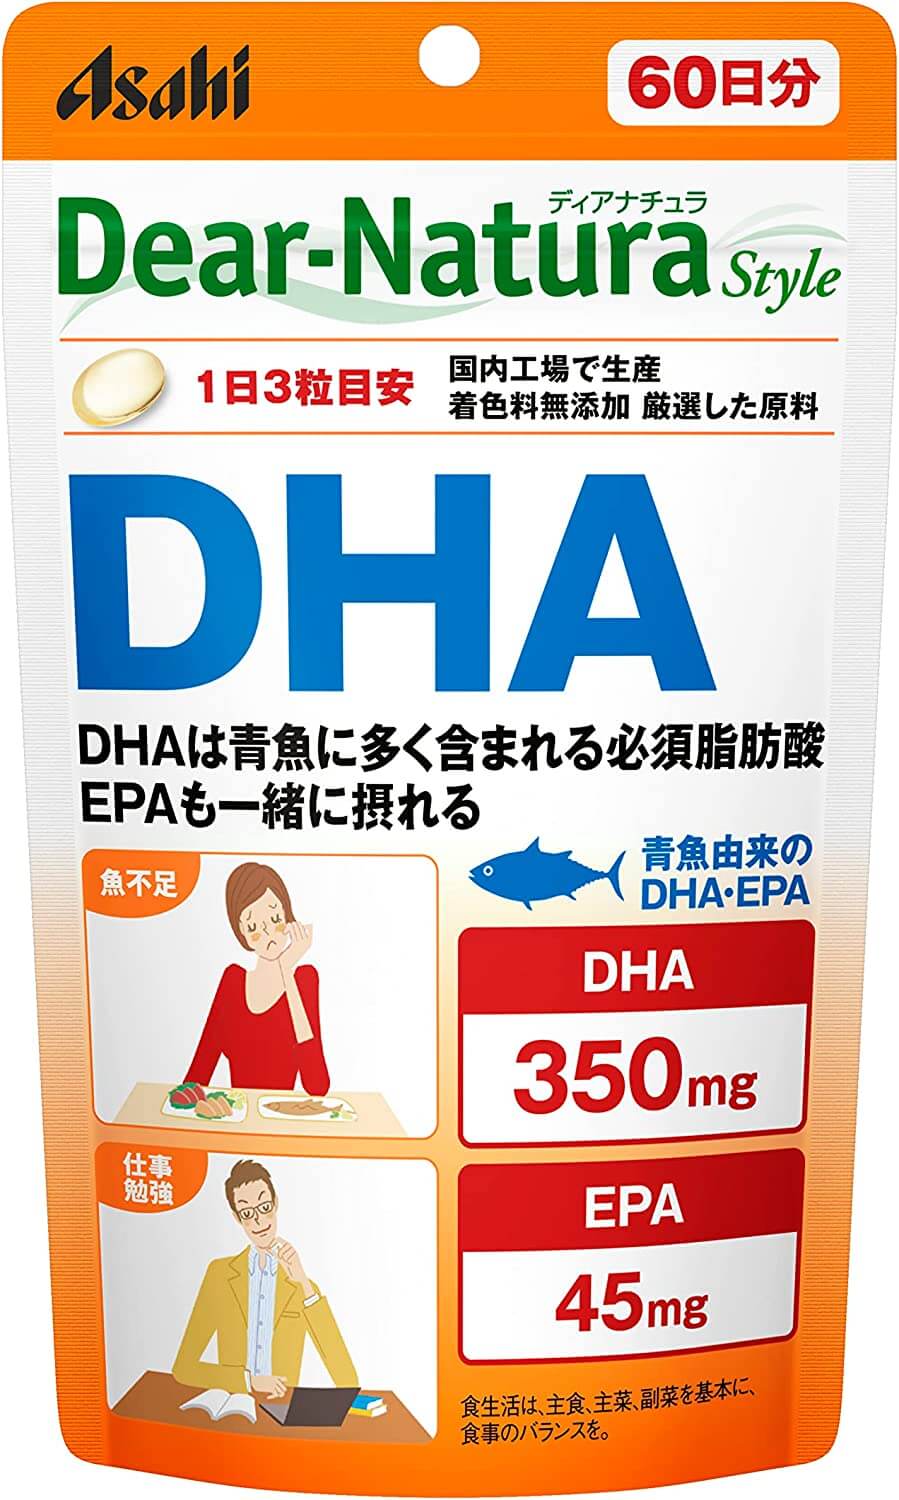 Пищевая добавка Asahi Dear Natura Style DHA x EPA, 180 капсул